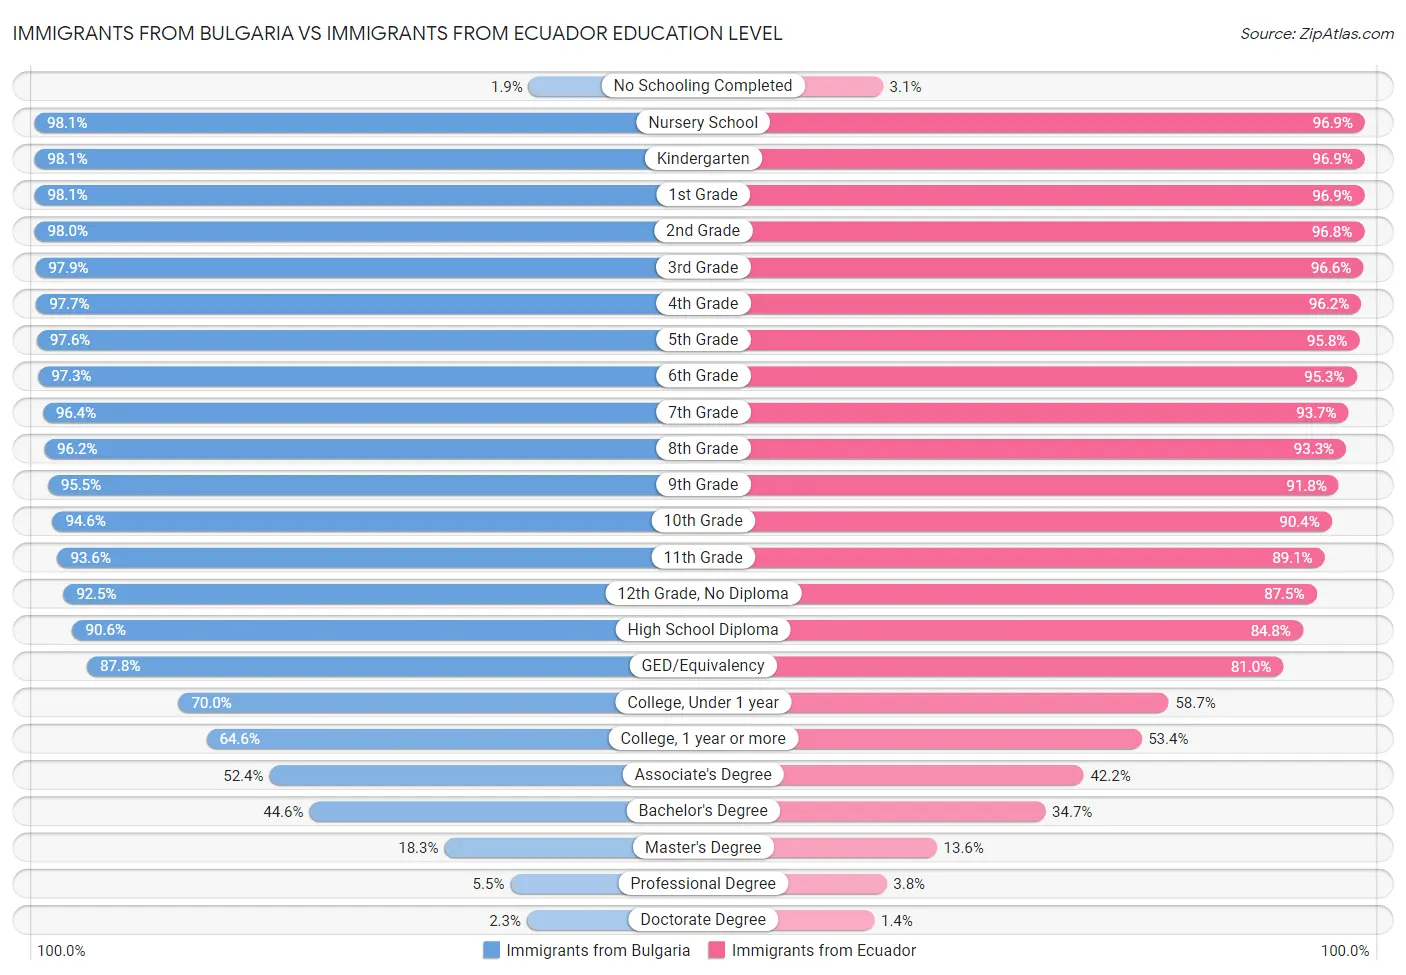 Immigrants from Bulgaria vs Immigrants from Ecuador Education Level